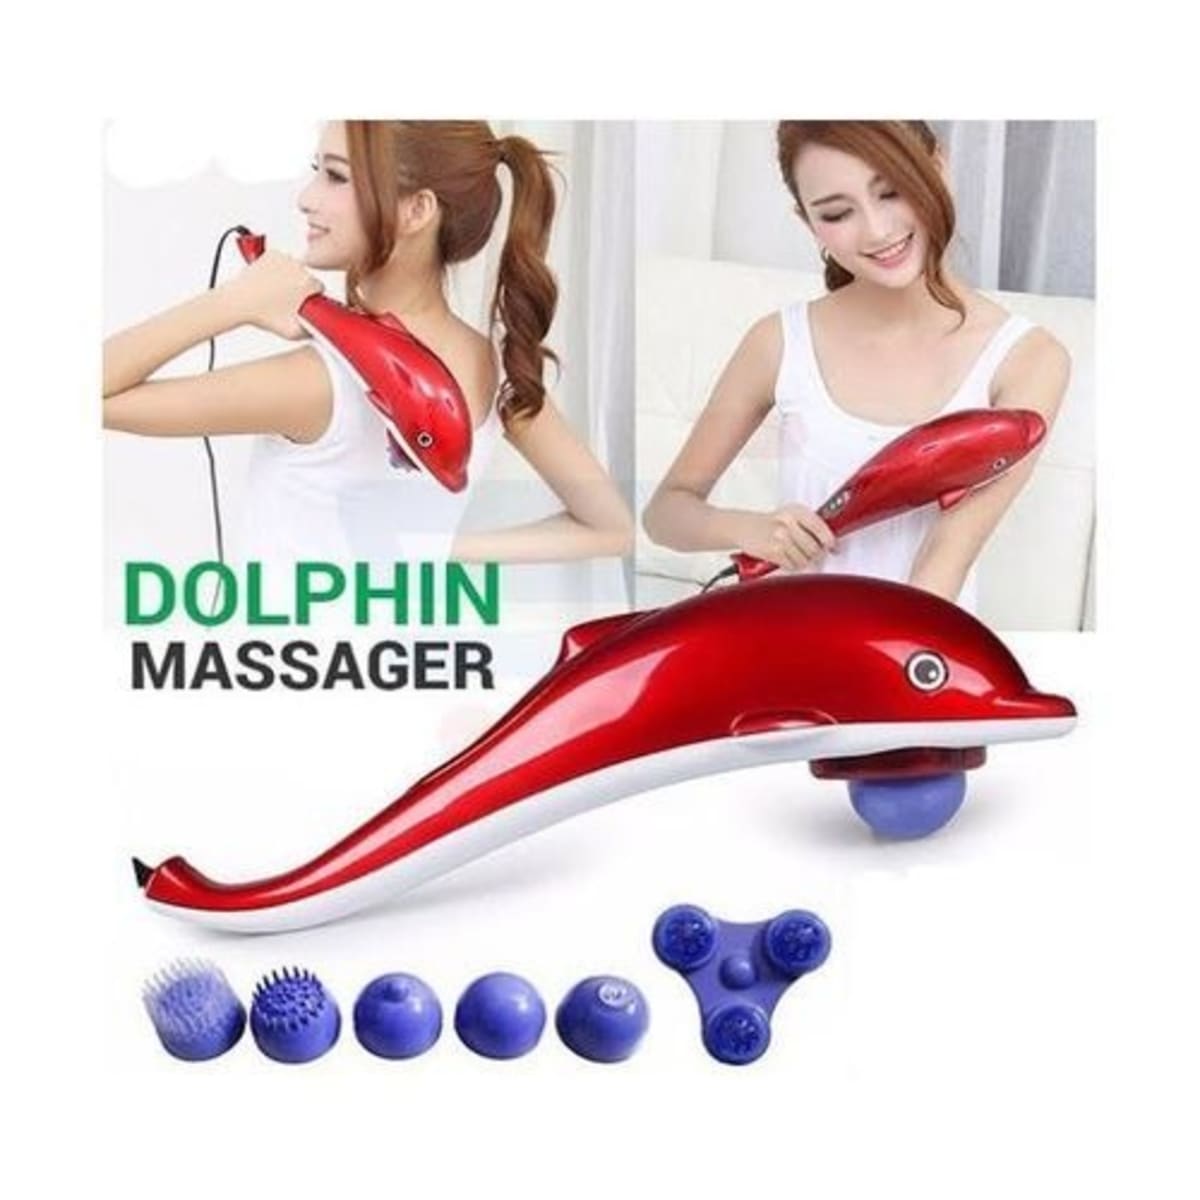 Dolphin Massage Equipment